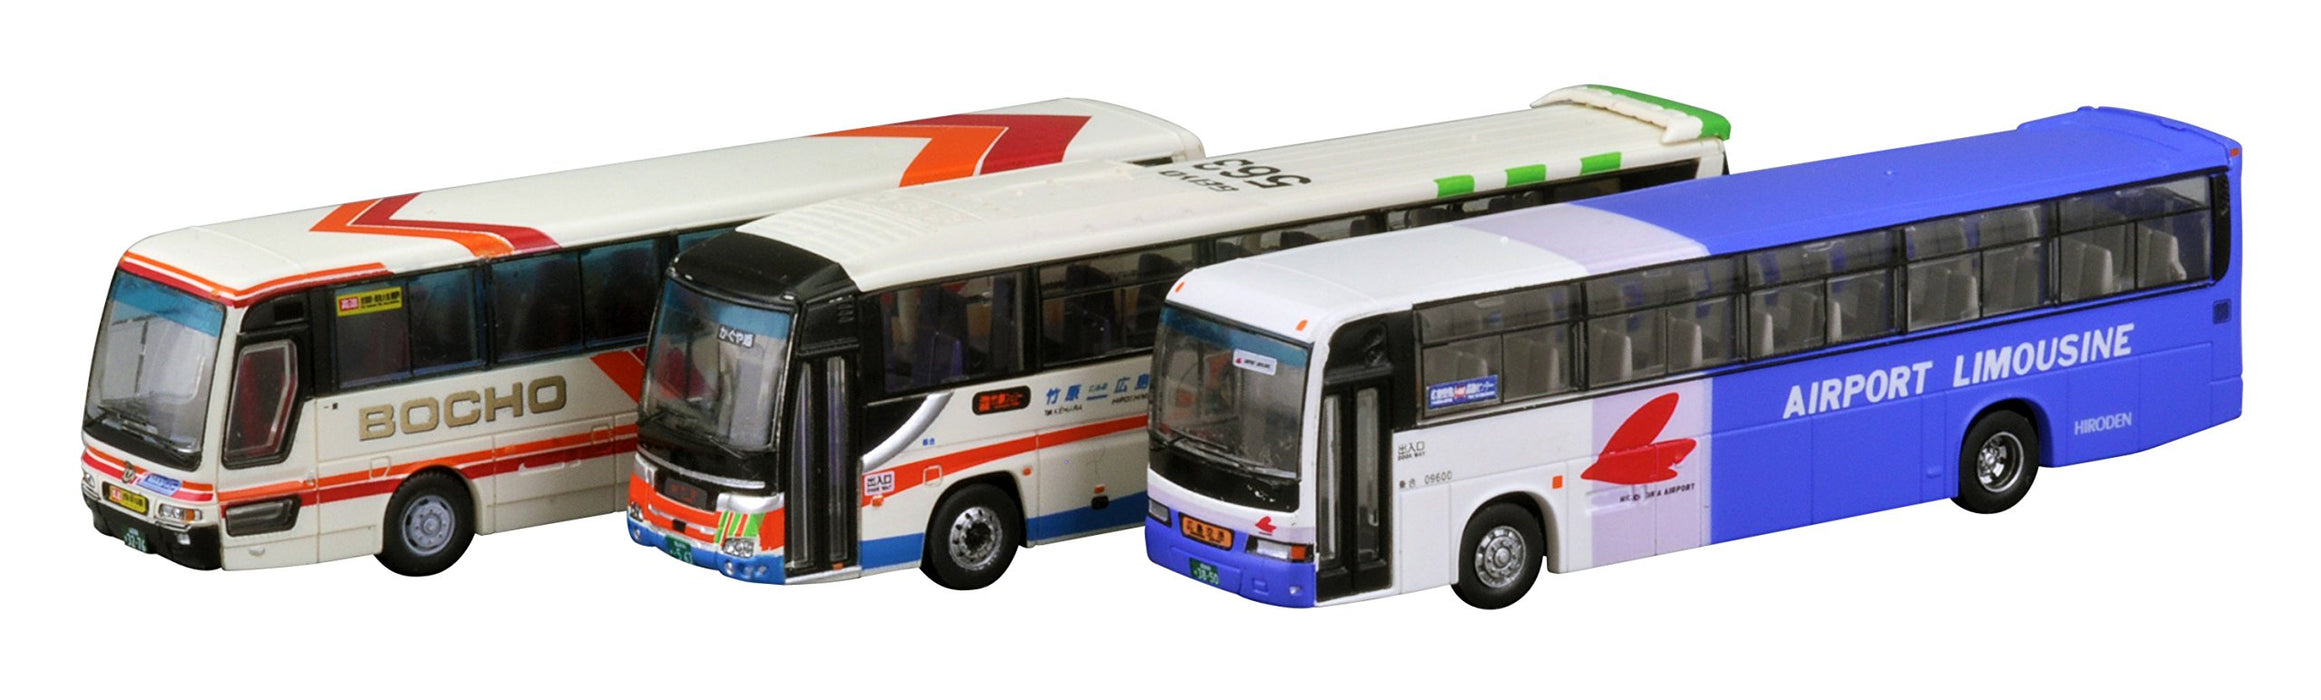 Tomytec Hiroshima Bus Center Set B Limited Edition Diorama Bus Collection